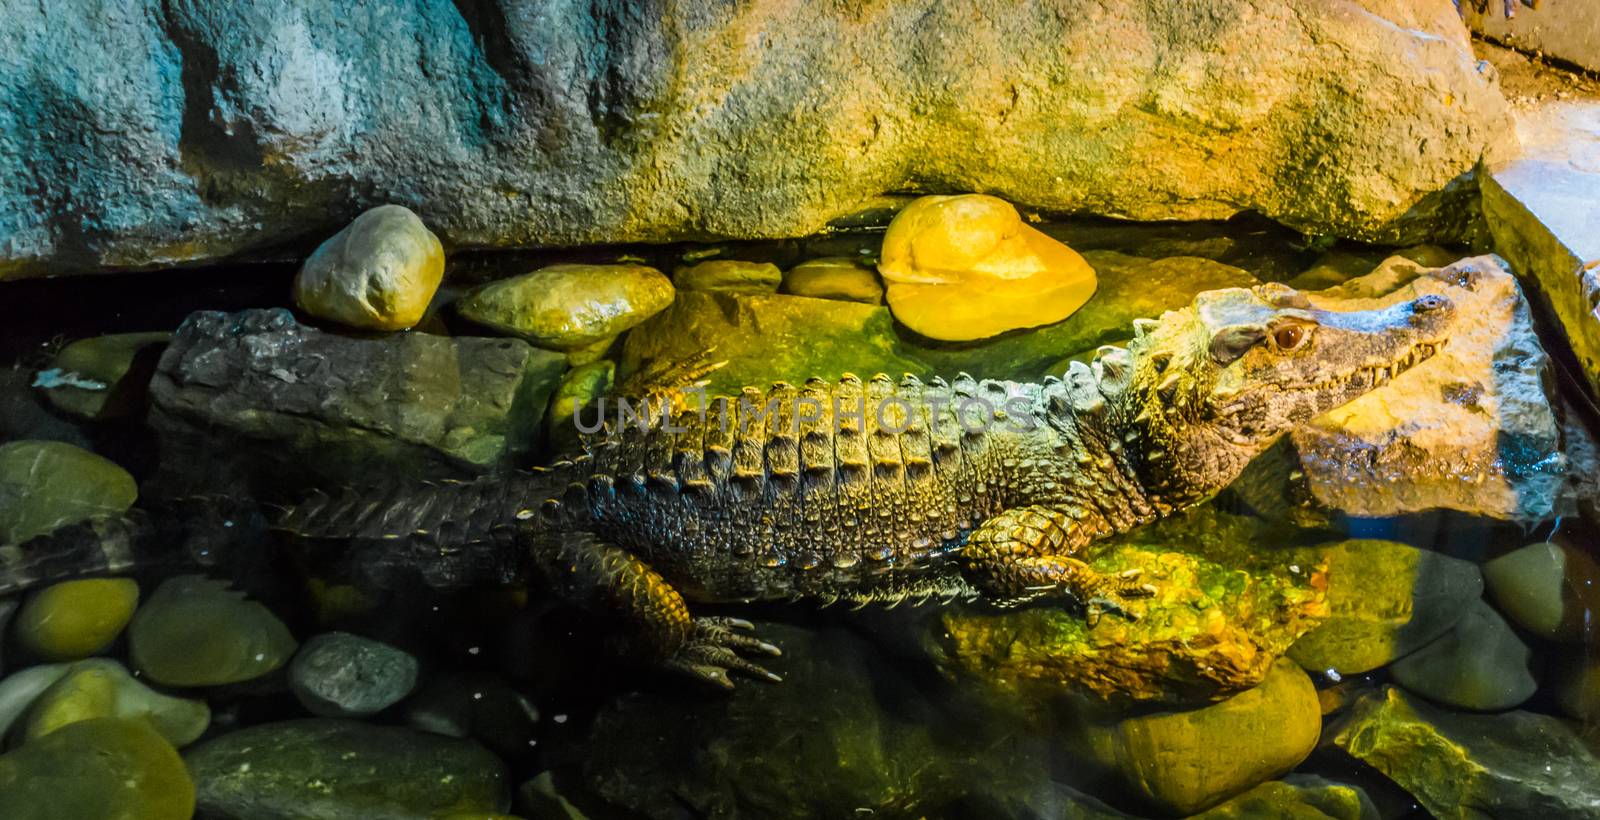 African adult dwarf or bony crocodile with deep red eyes sitting in the water wildlife portrait of a dangerous predator by charlottebleijenberg